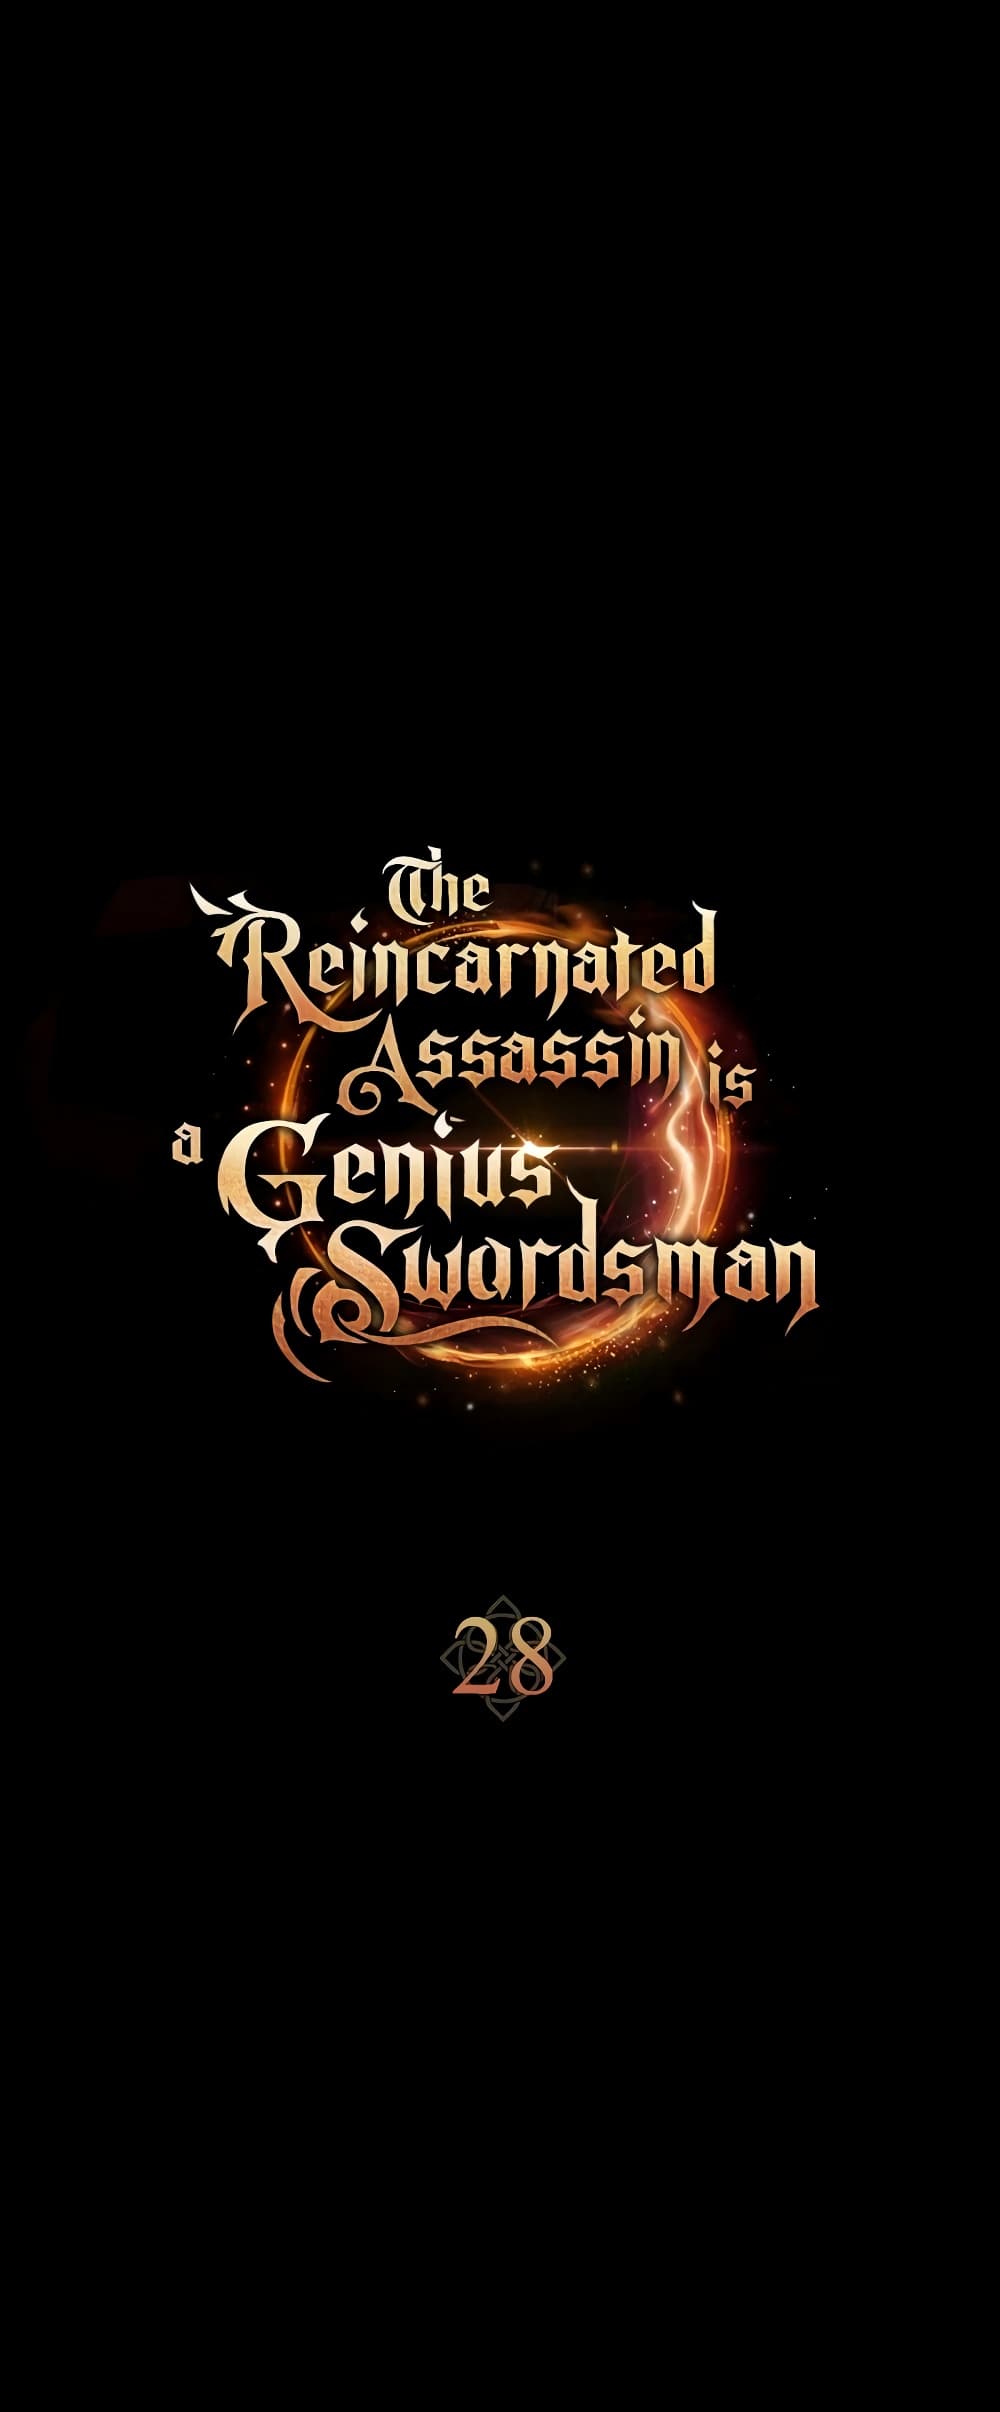 The Reincarnated Assassin is a Genius Swordsman 28-28